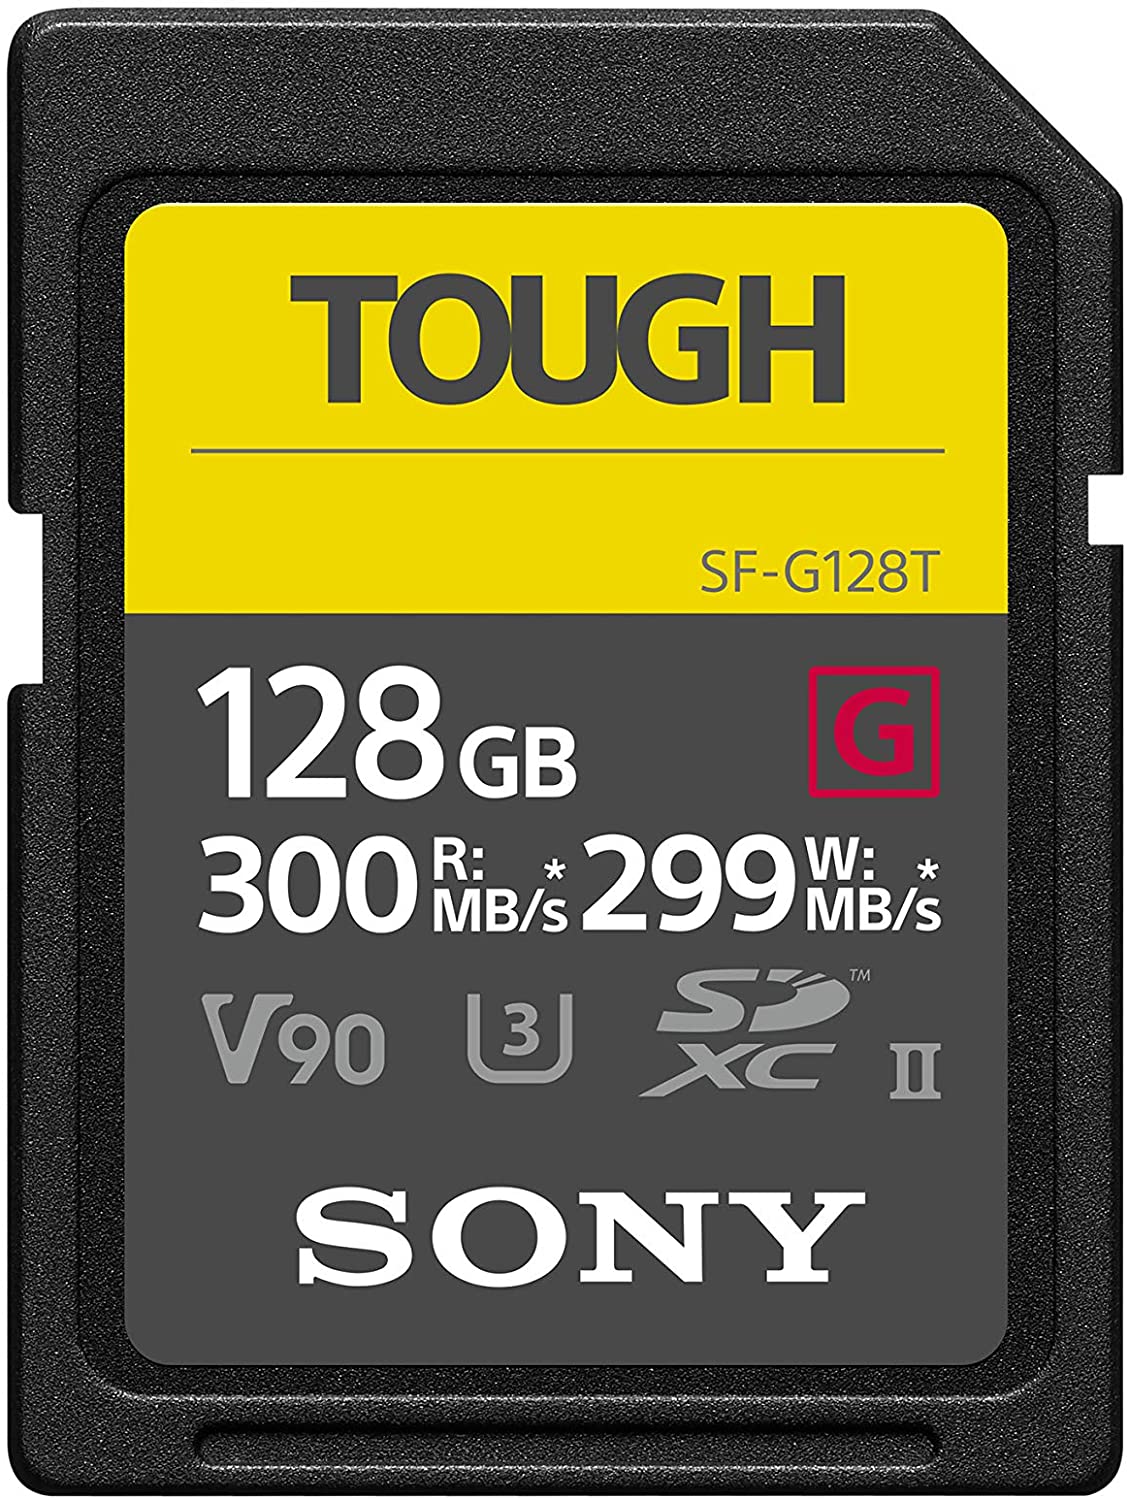 Sony TOUGH-G series SDXC UHS-II Secure Digital SD Card - 128GB